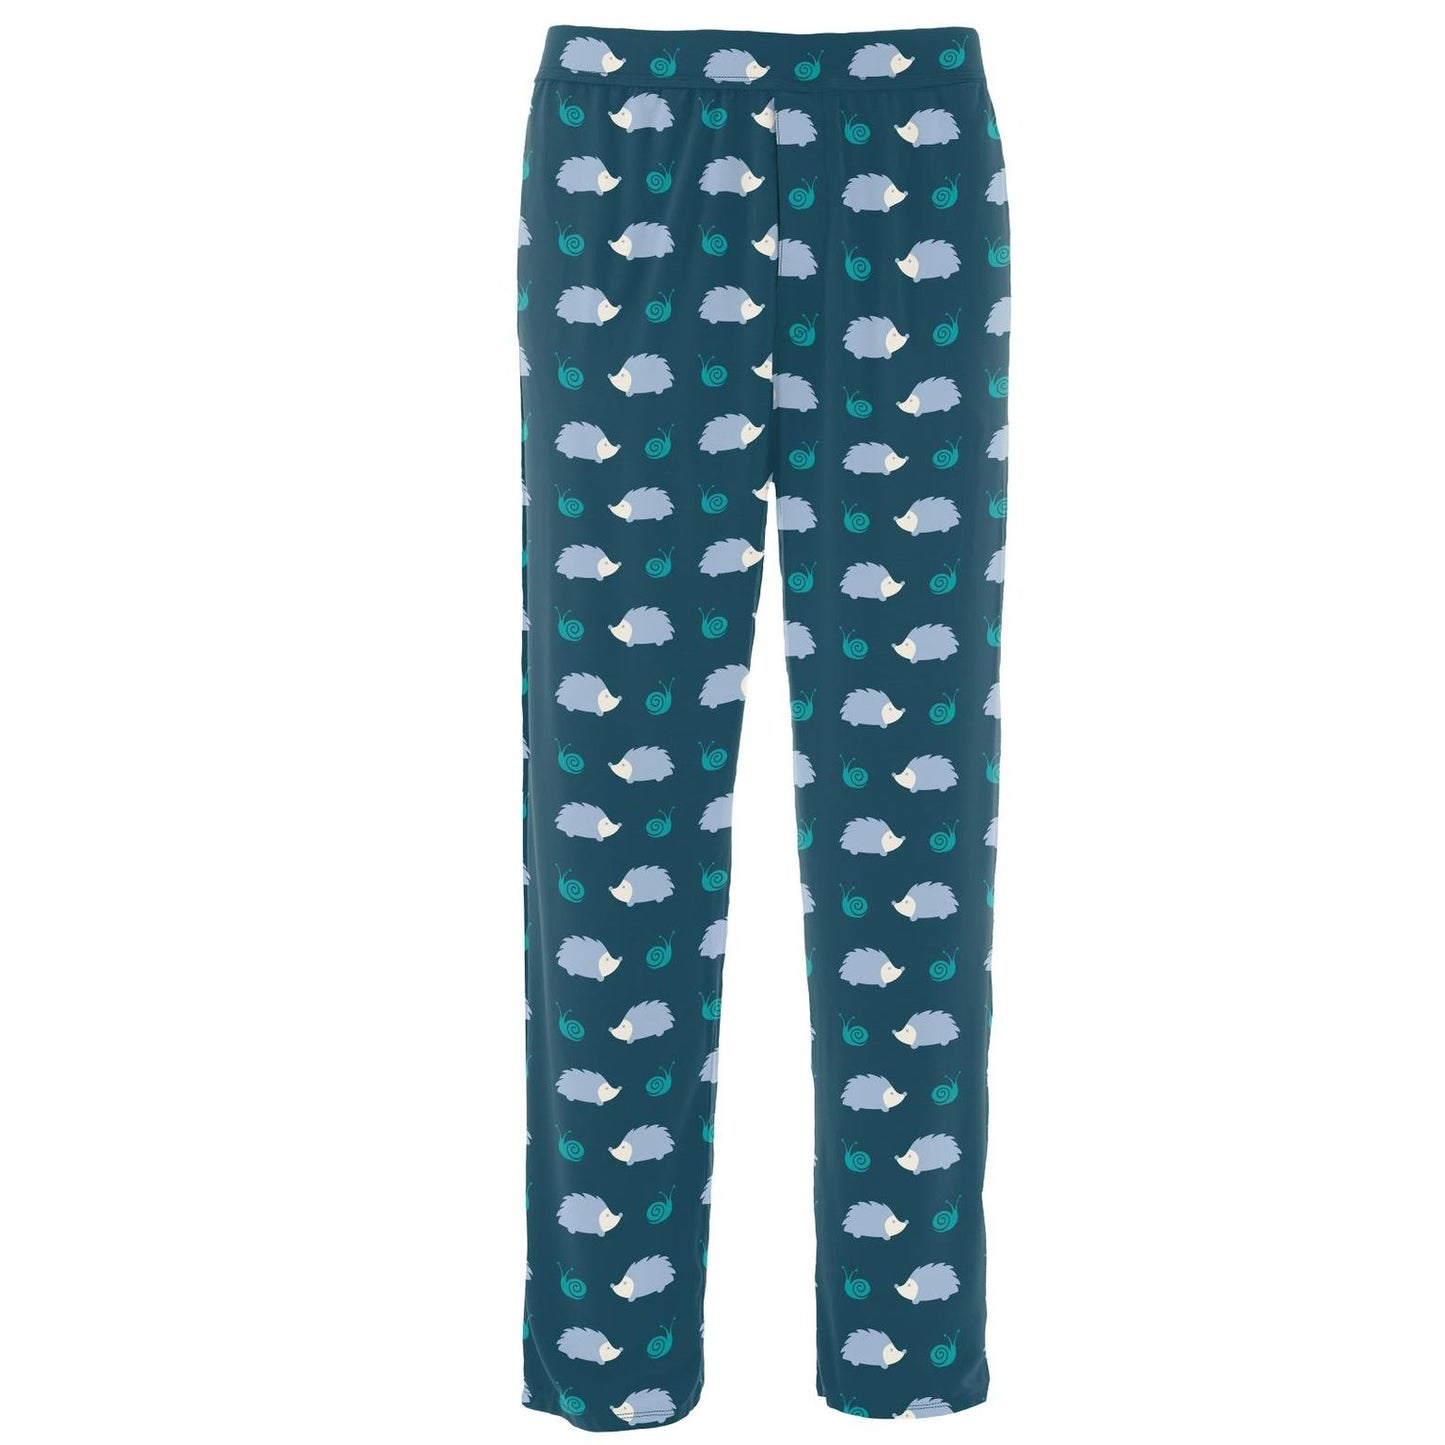 Adult Pajama Pants - Peacock Hedgehog